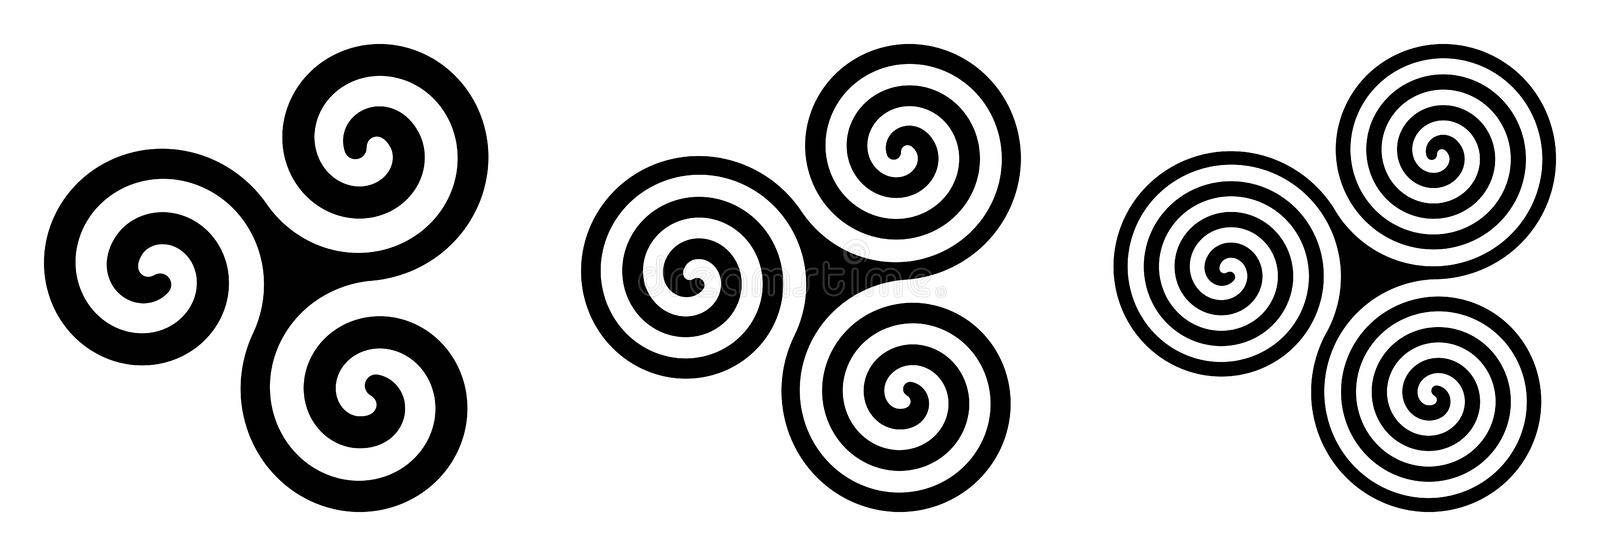 Celtic Triskelion And Alternatives